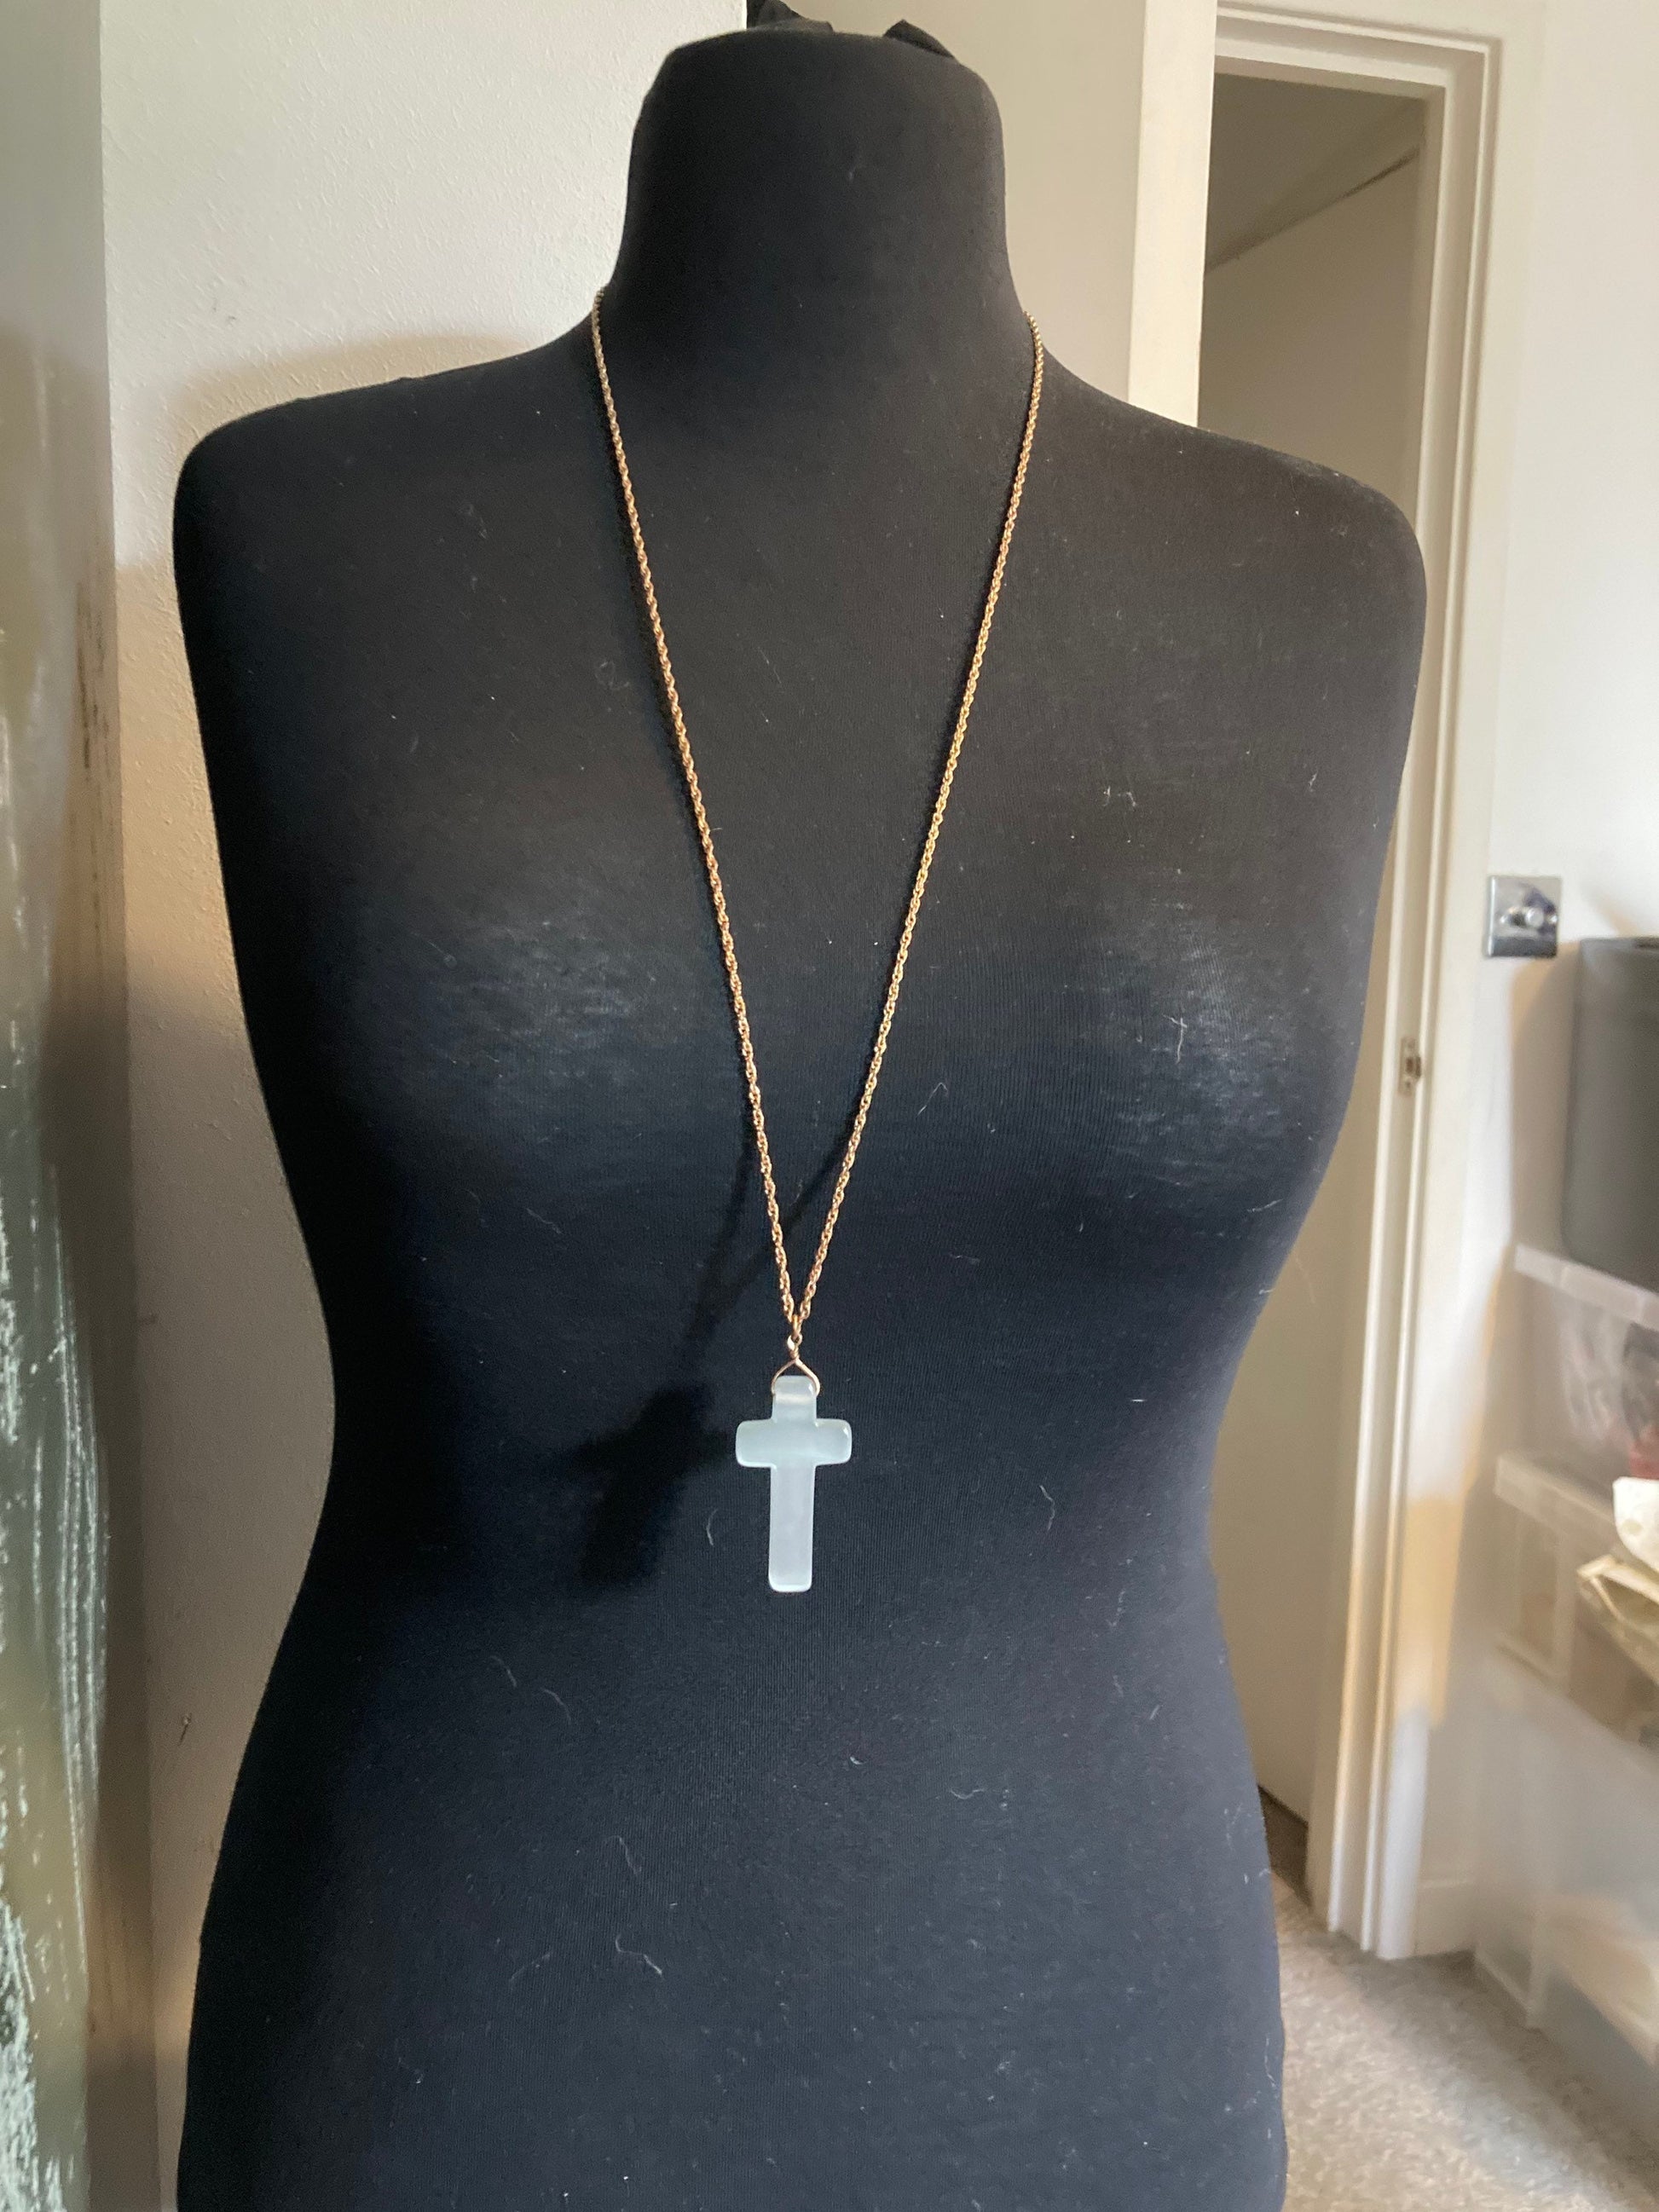 Retro glass or opaque white gemstone religious 6cm chunky cross pendant necklace 88cm gold tone chain